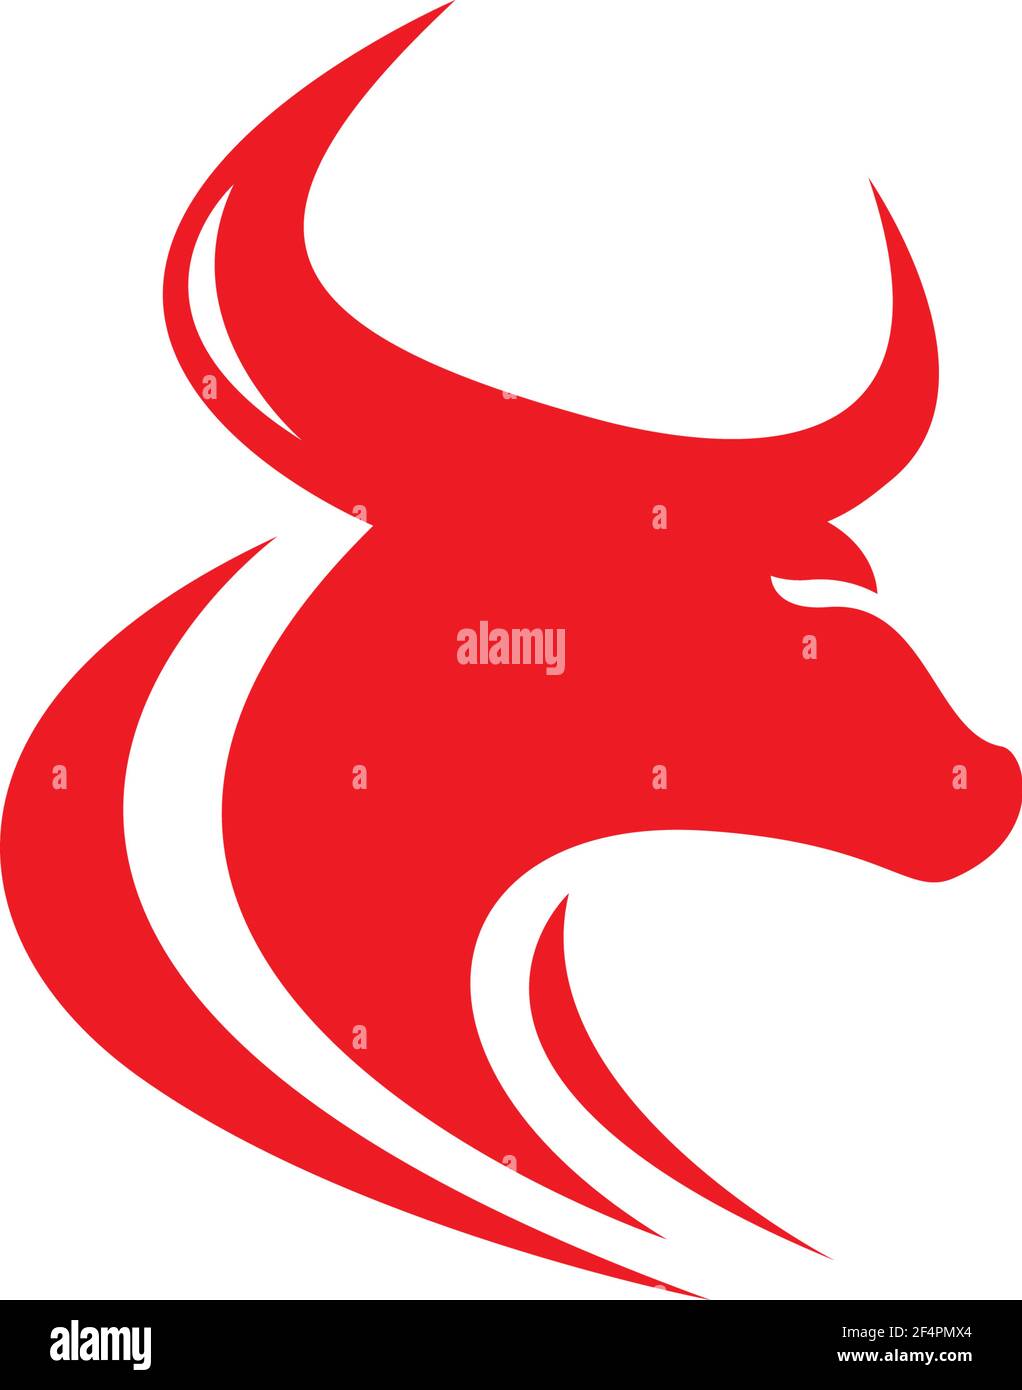 Bull head logo images Stock Vector